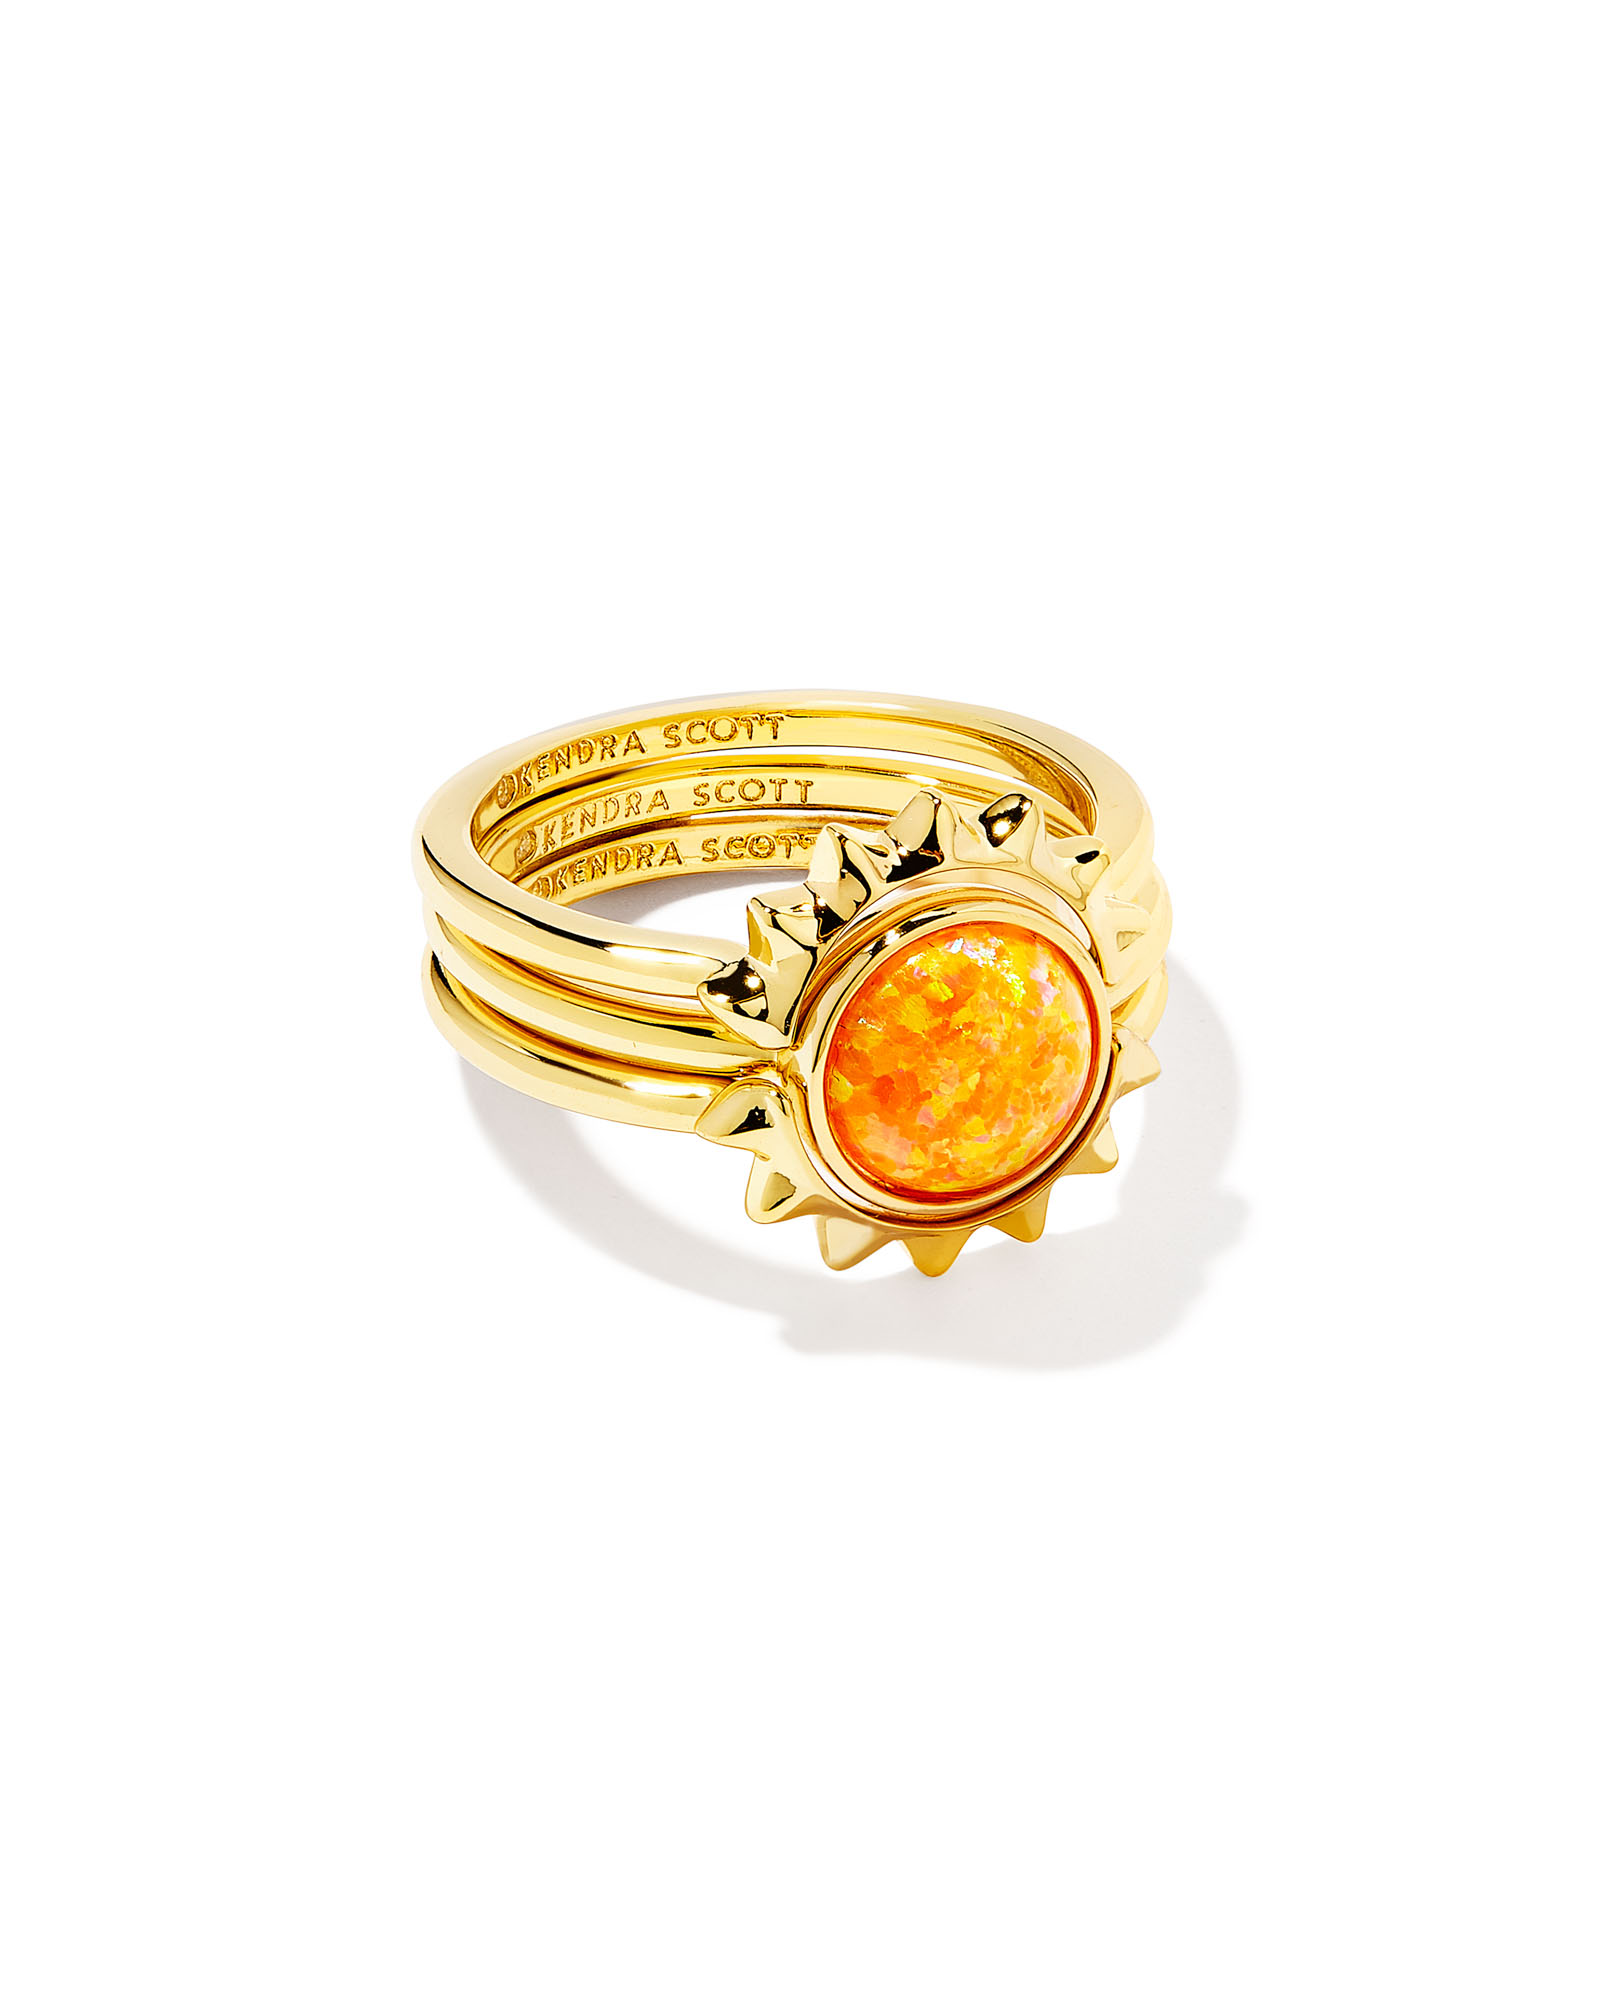 Whitney 14k Yellow Gold Band Ring in White Diamond | Kendra Scott